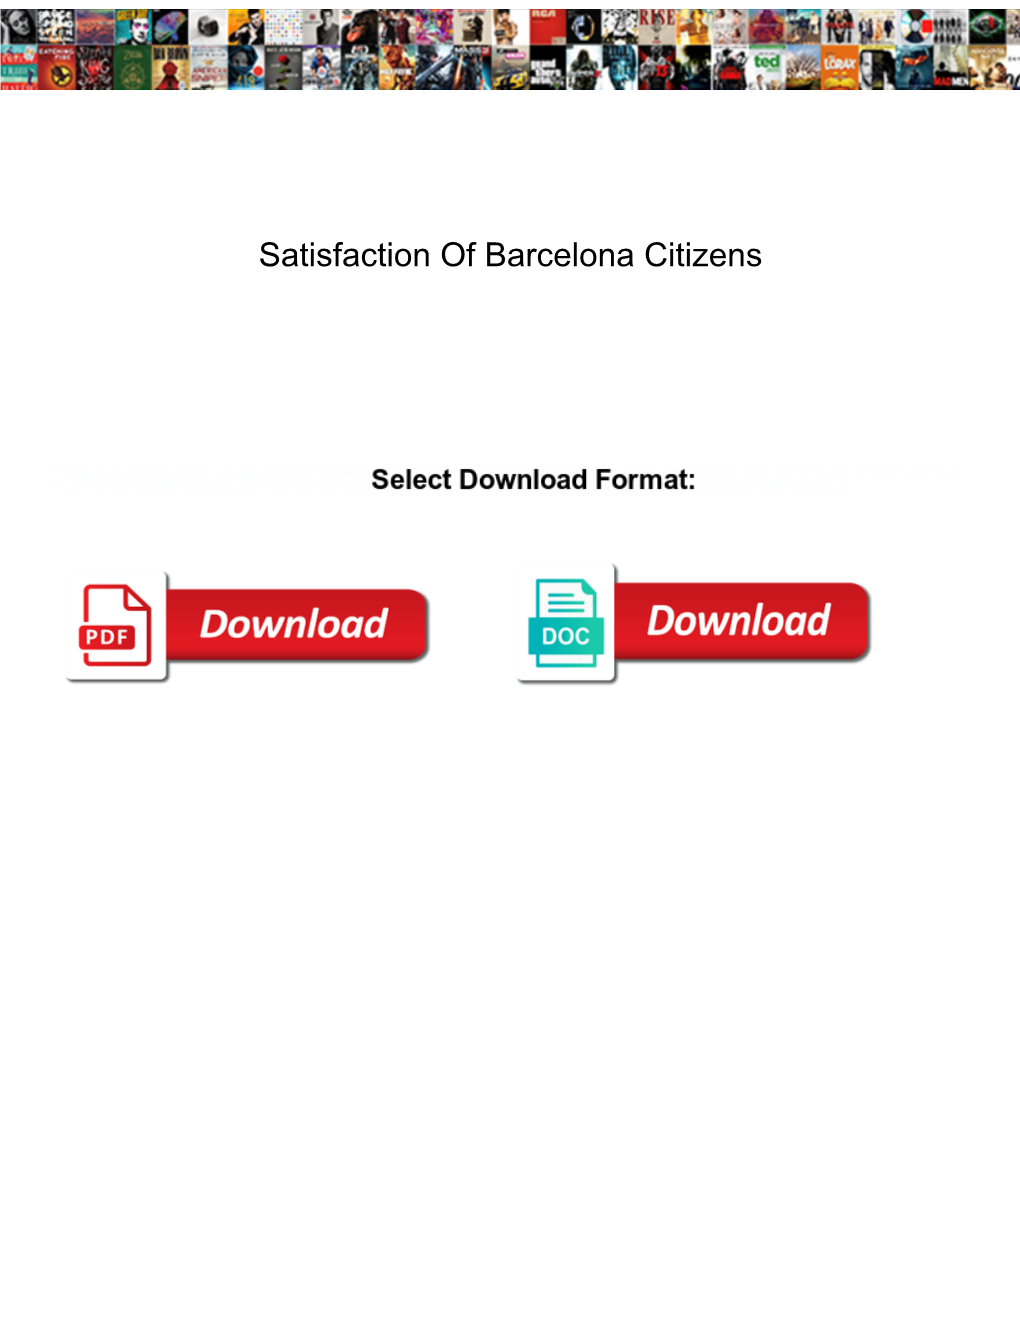 Satisfaction of Barcelona Citizens